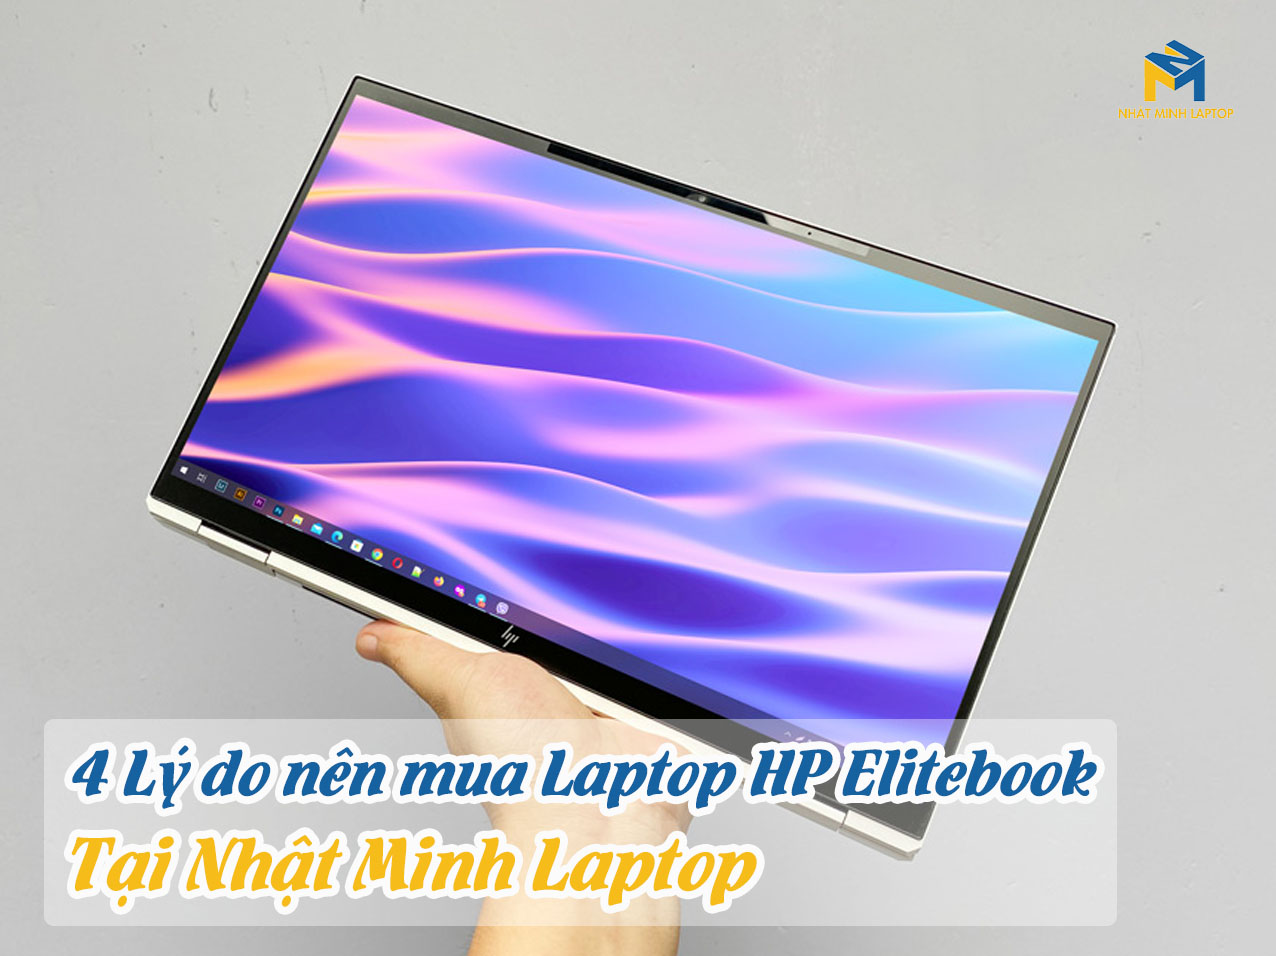 laptop hp elitebook cũ giá rẻ